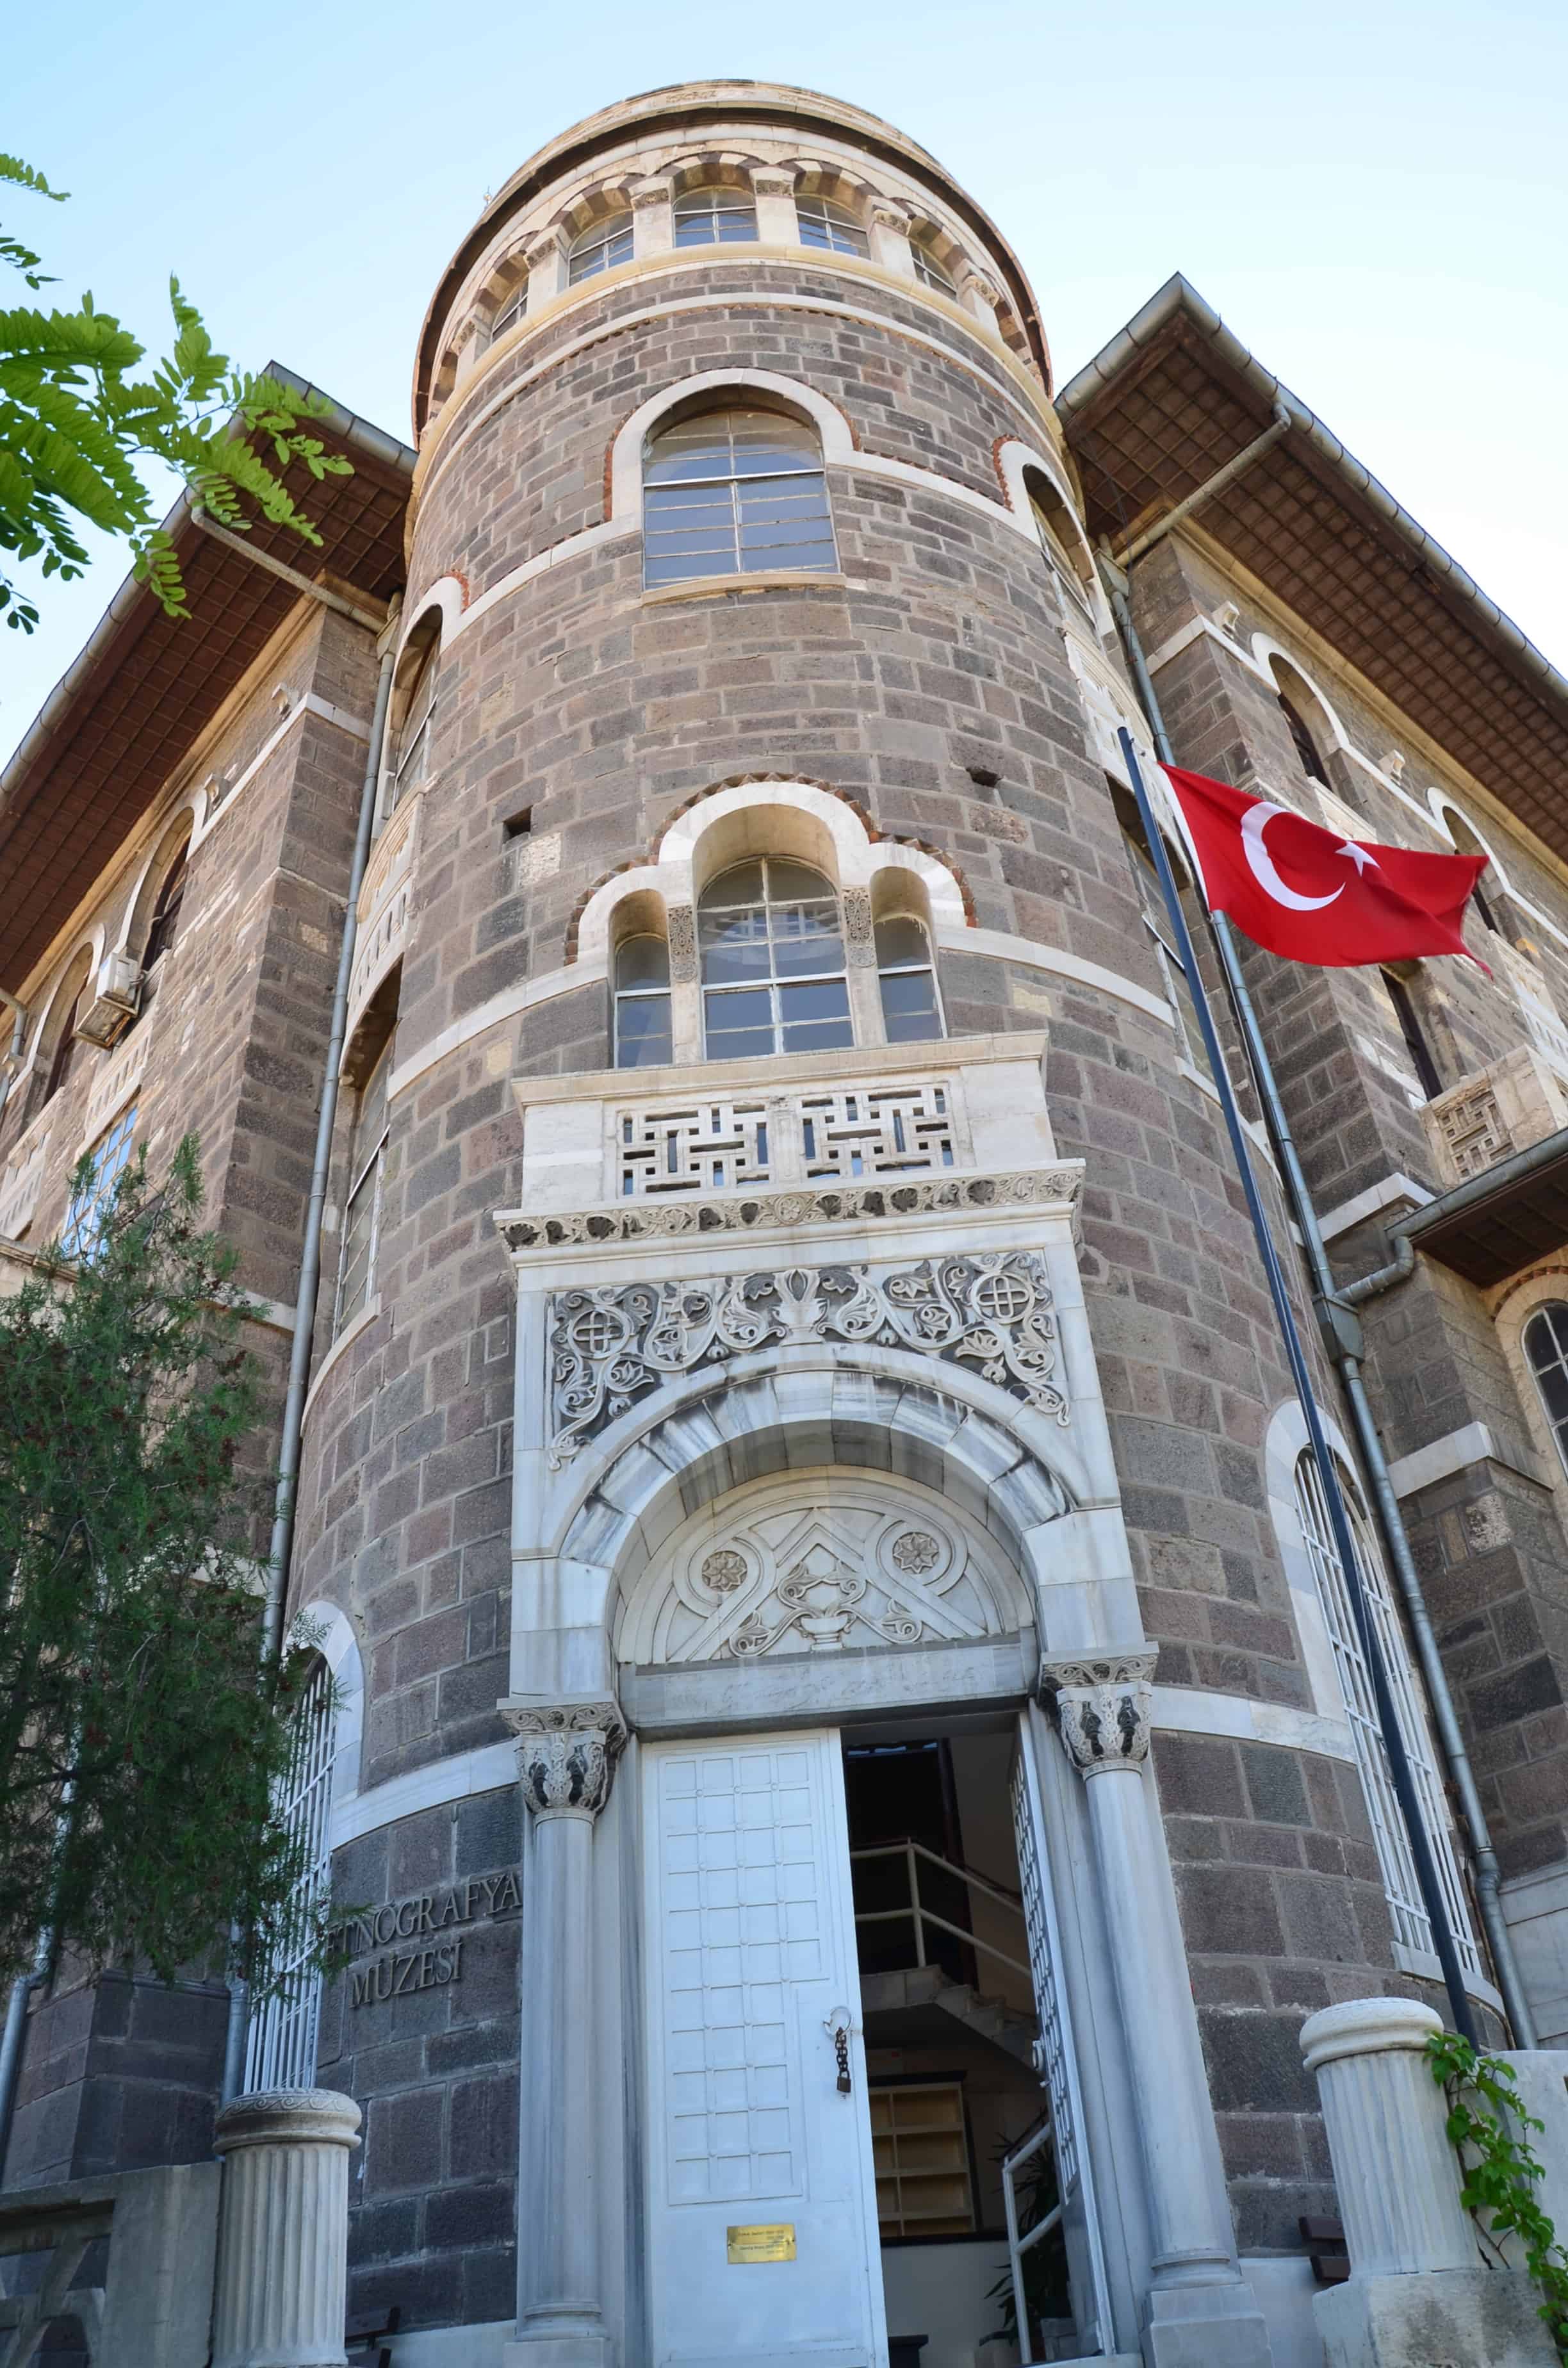 Izmir Ethnography Museum in Izmir, Turkey